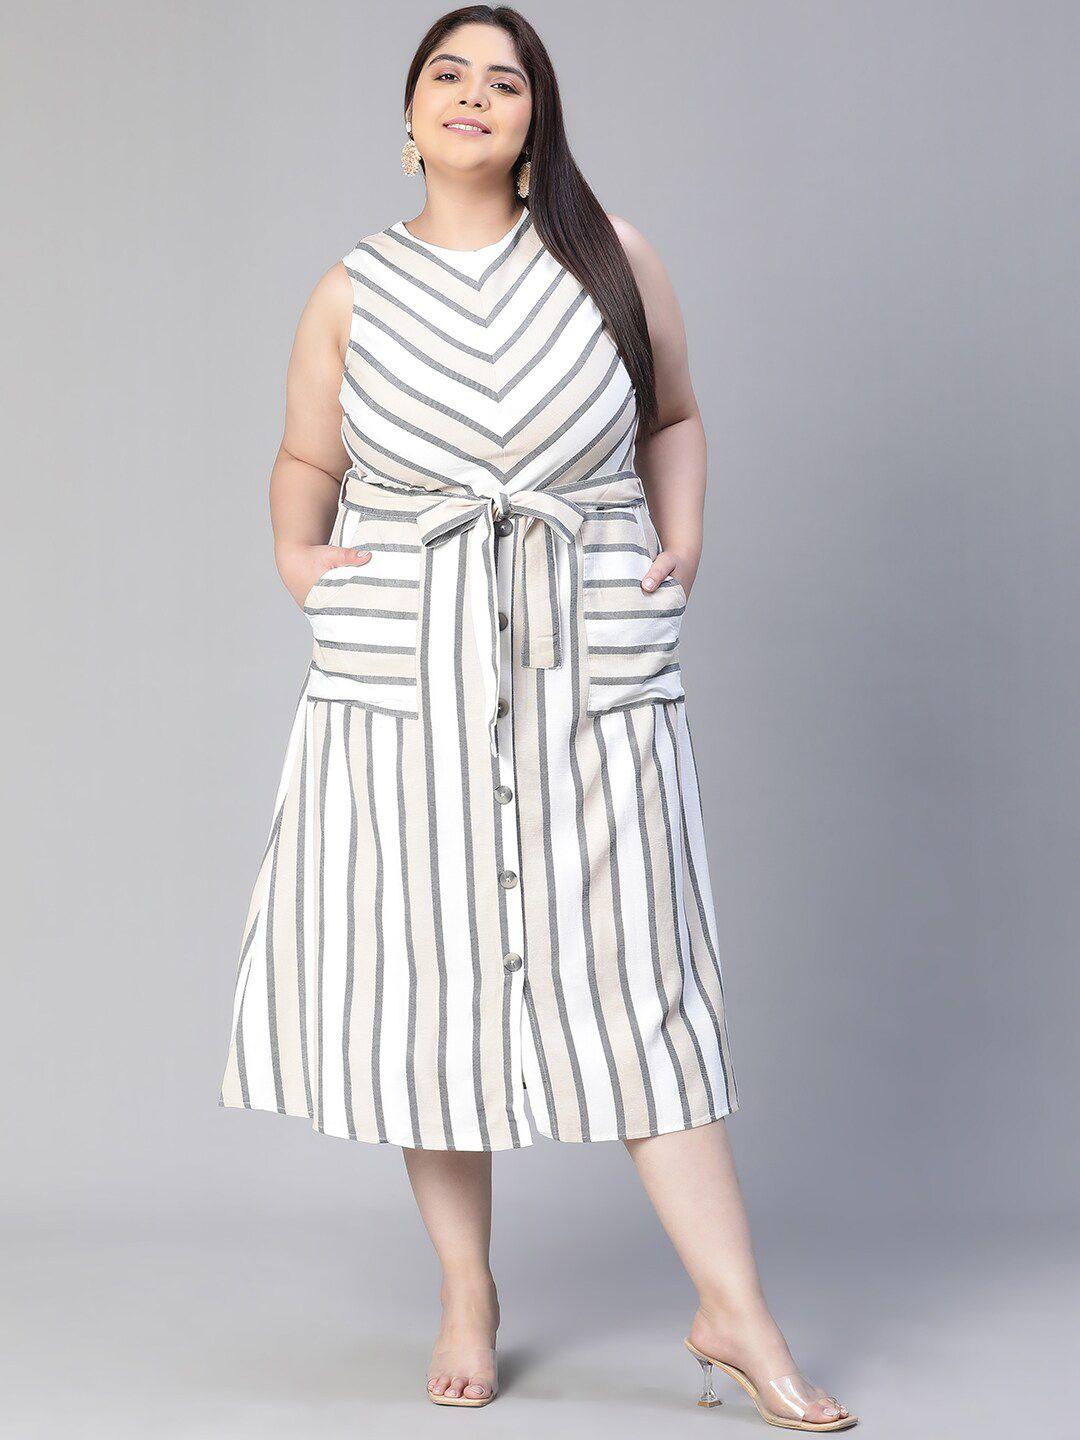 Oxolloxo Plus Size Striped Round Neck Cotton A-Line Dress